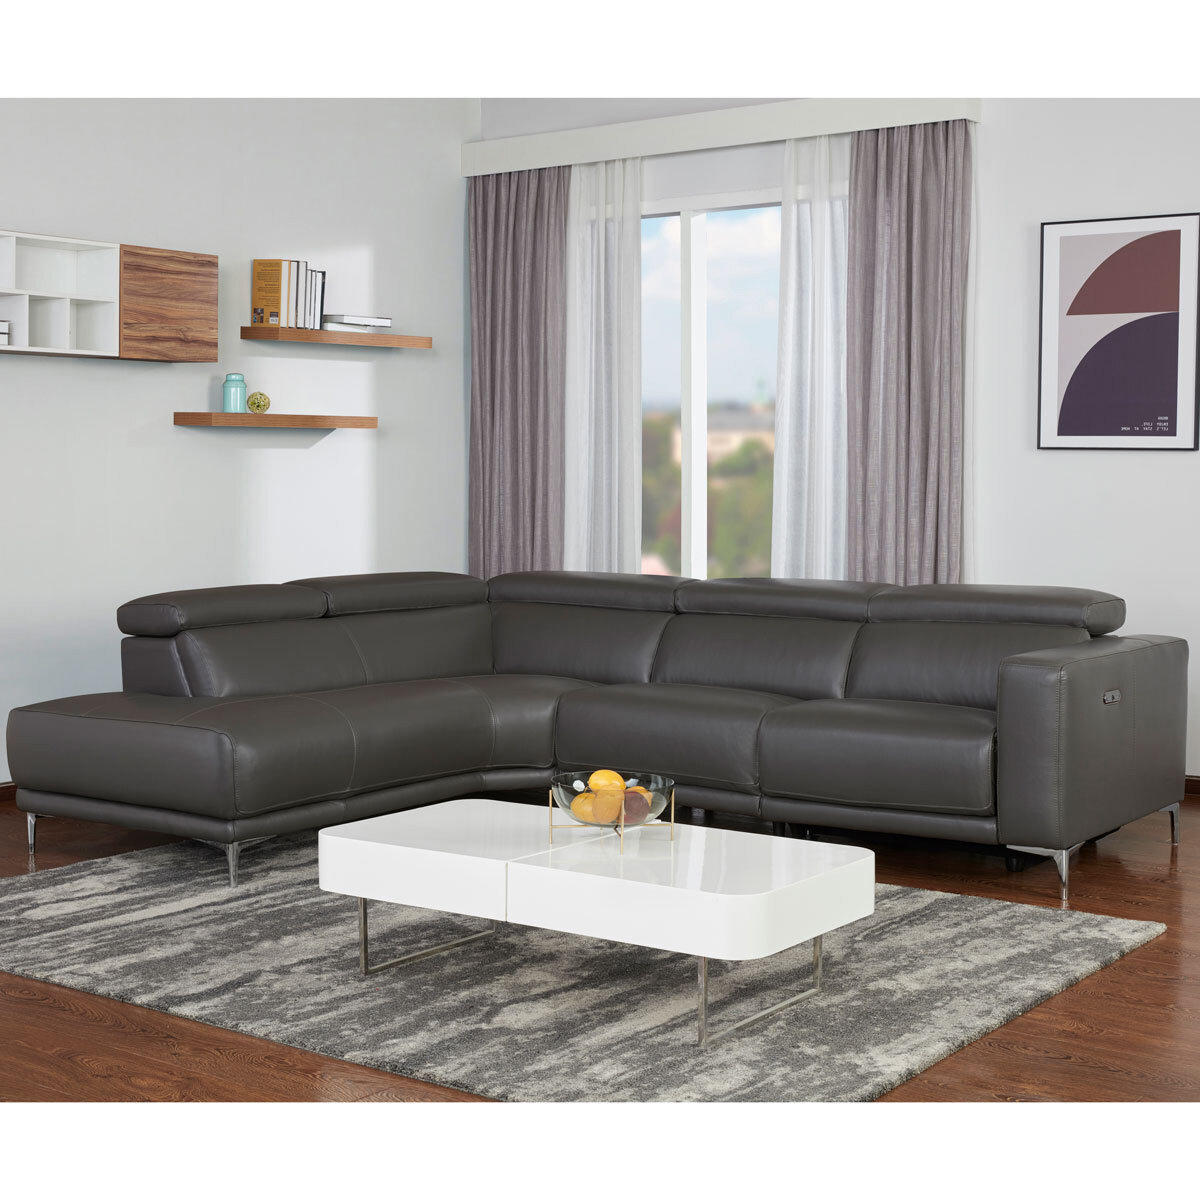 Kuka Redland Dark Grey Leather Power Reclining Sectional Sofa Costco Uk